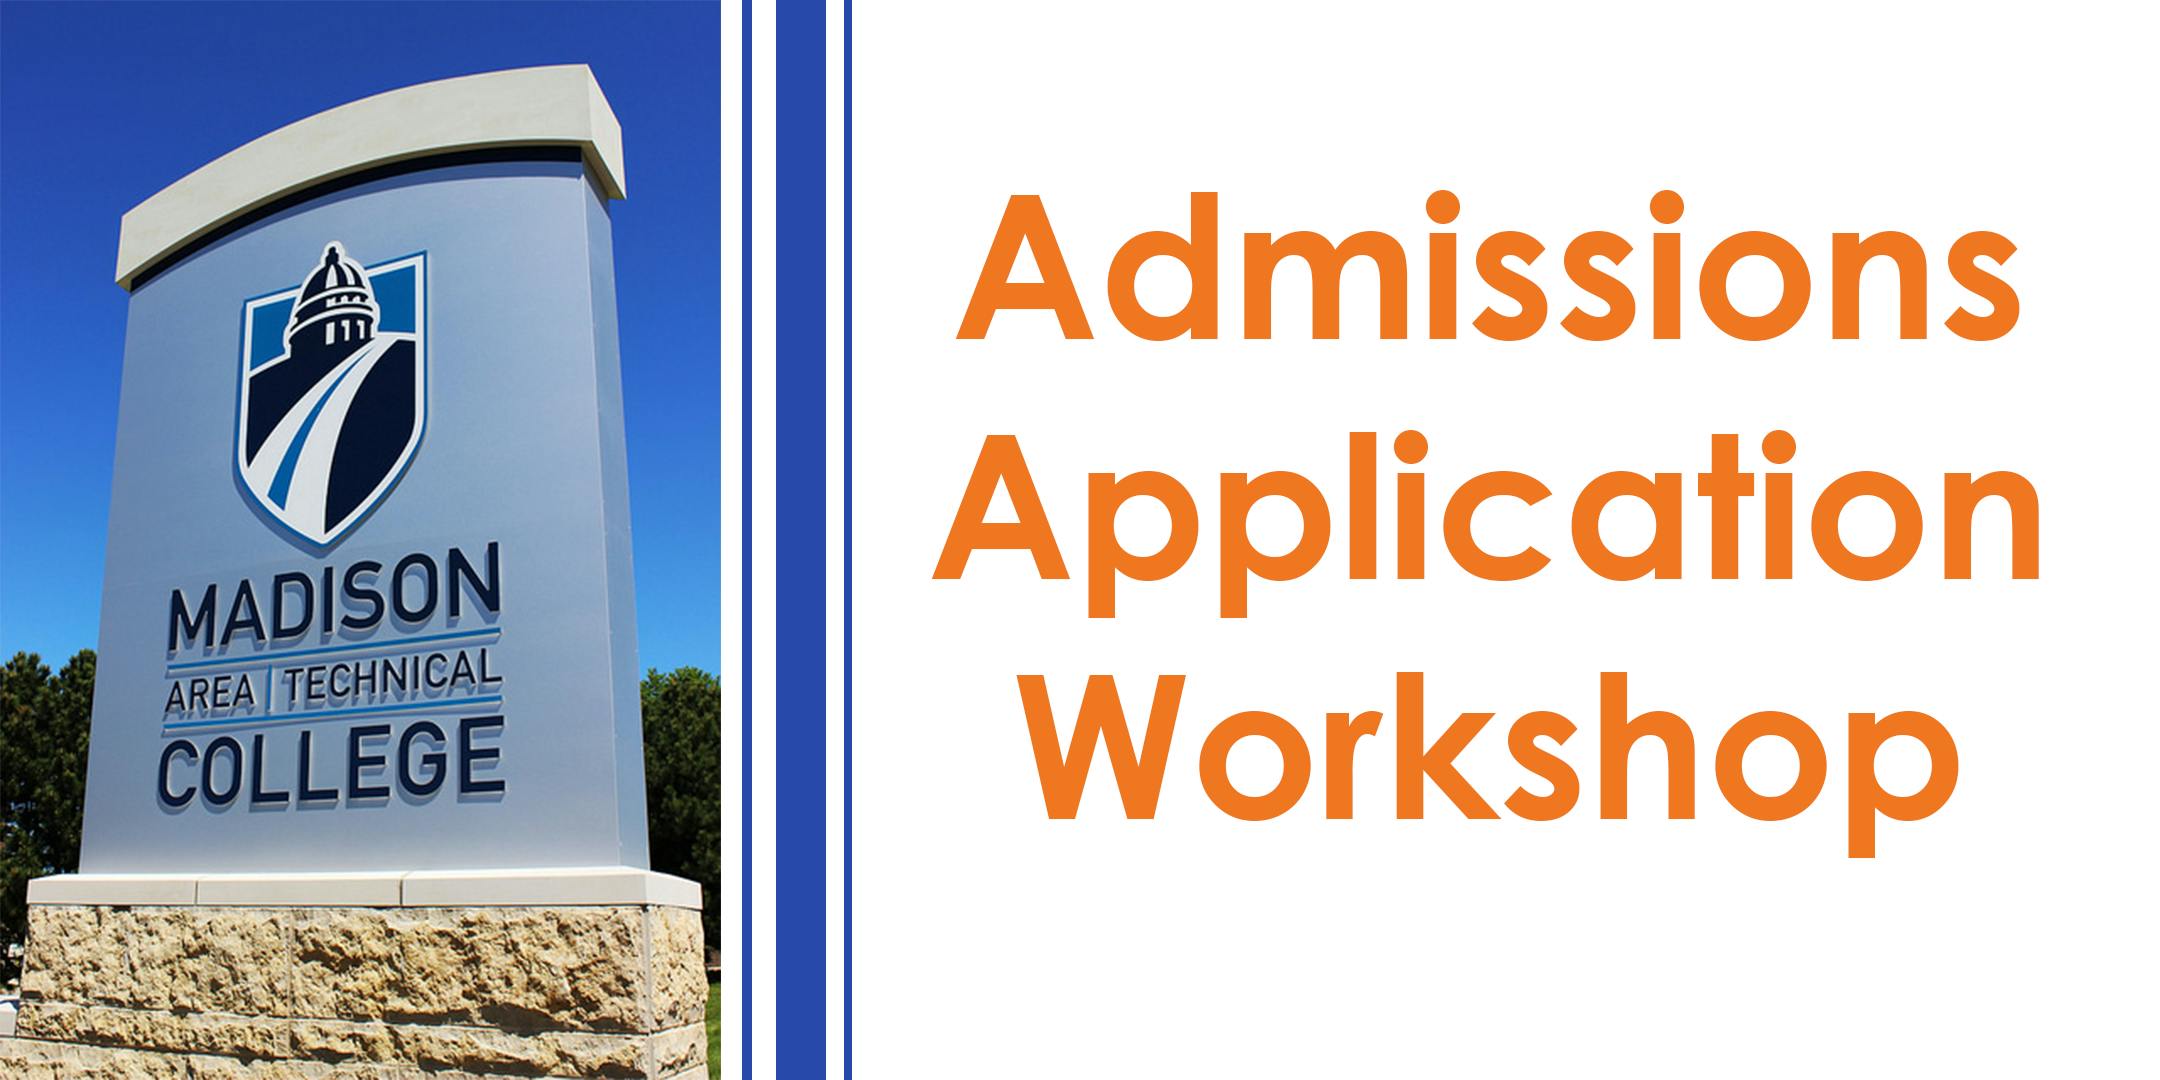 Admissions Application Workshop